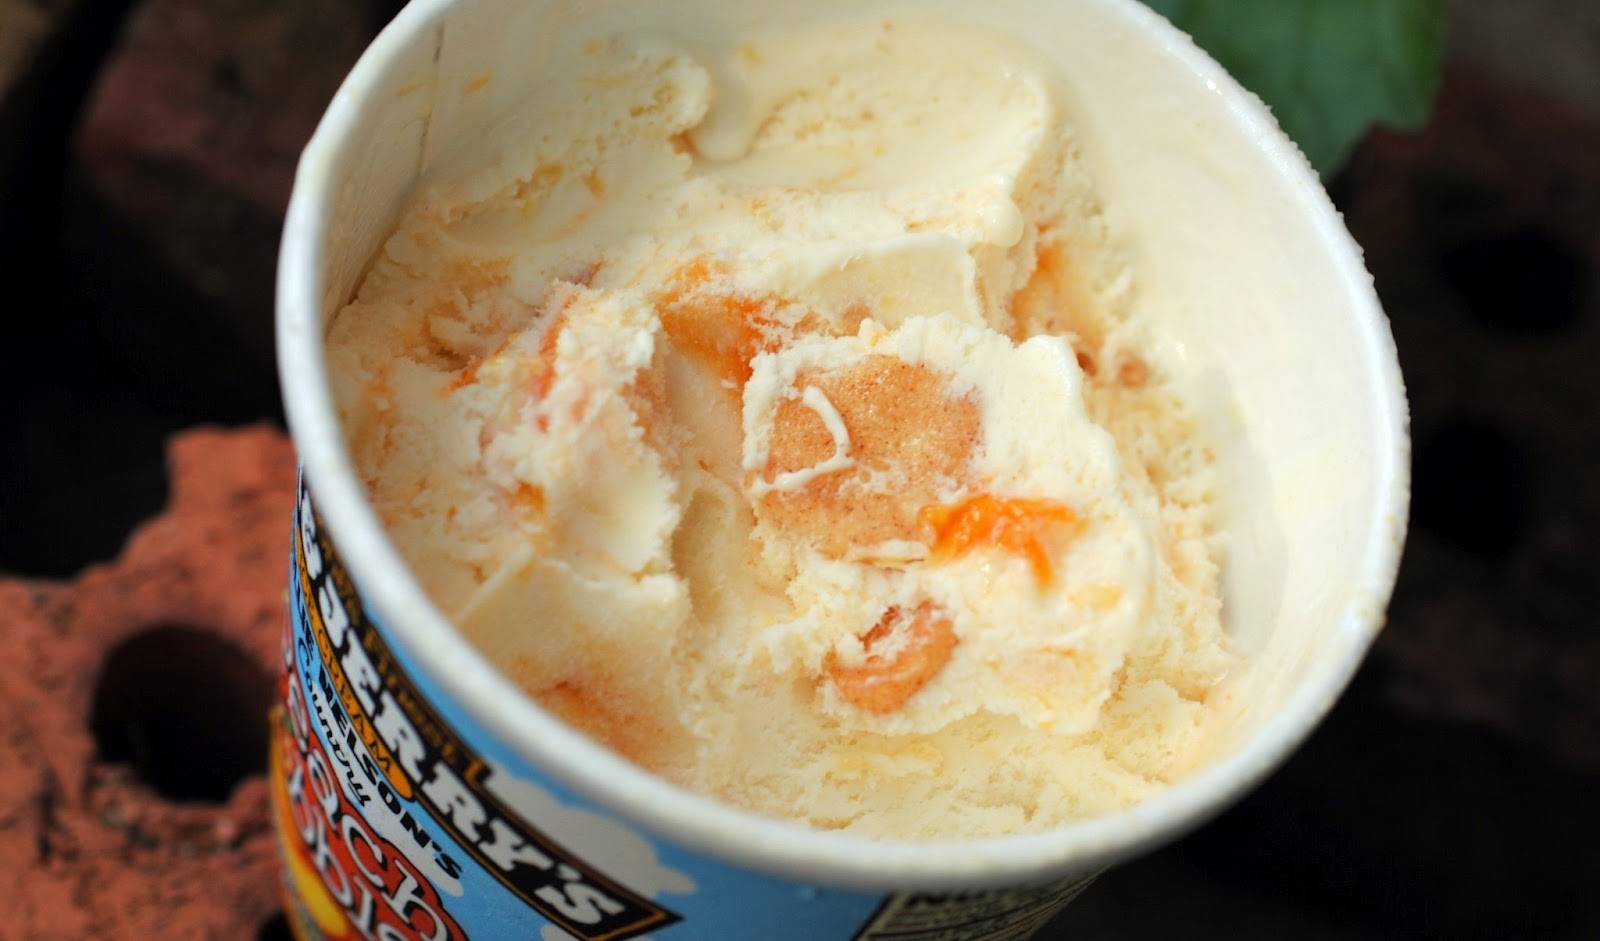 Ben & Jerry's Willie Nelson's Country Peach Cobbler cream